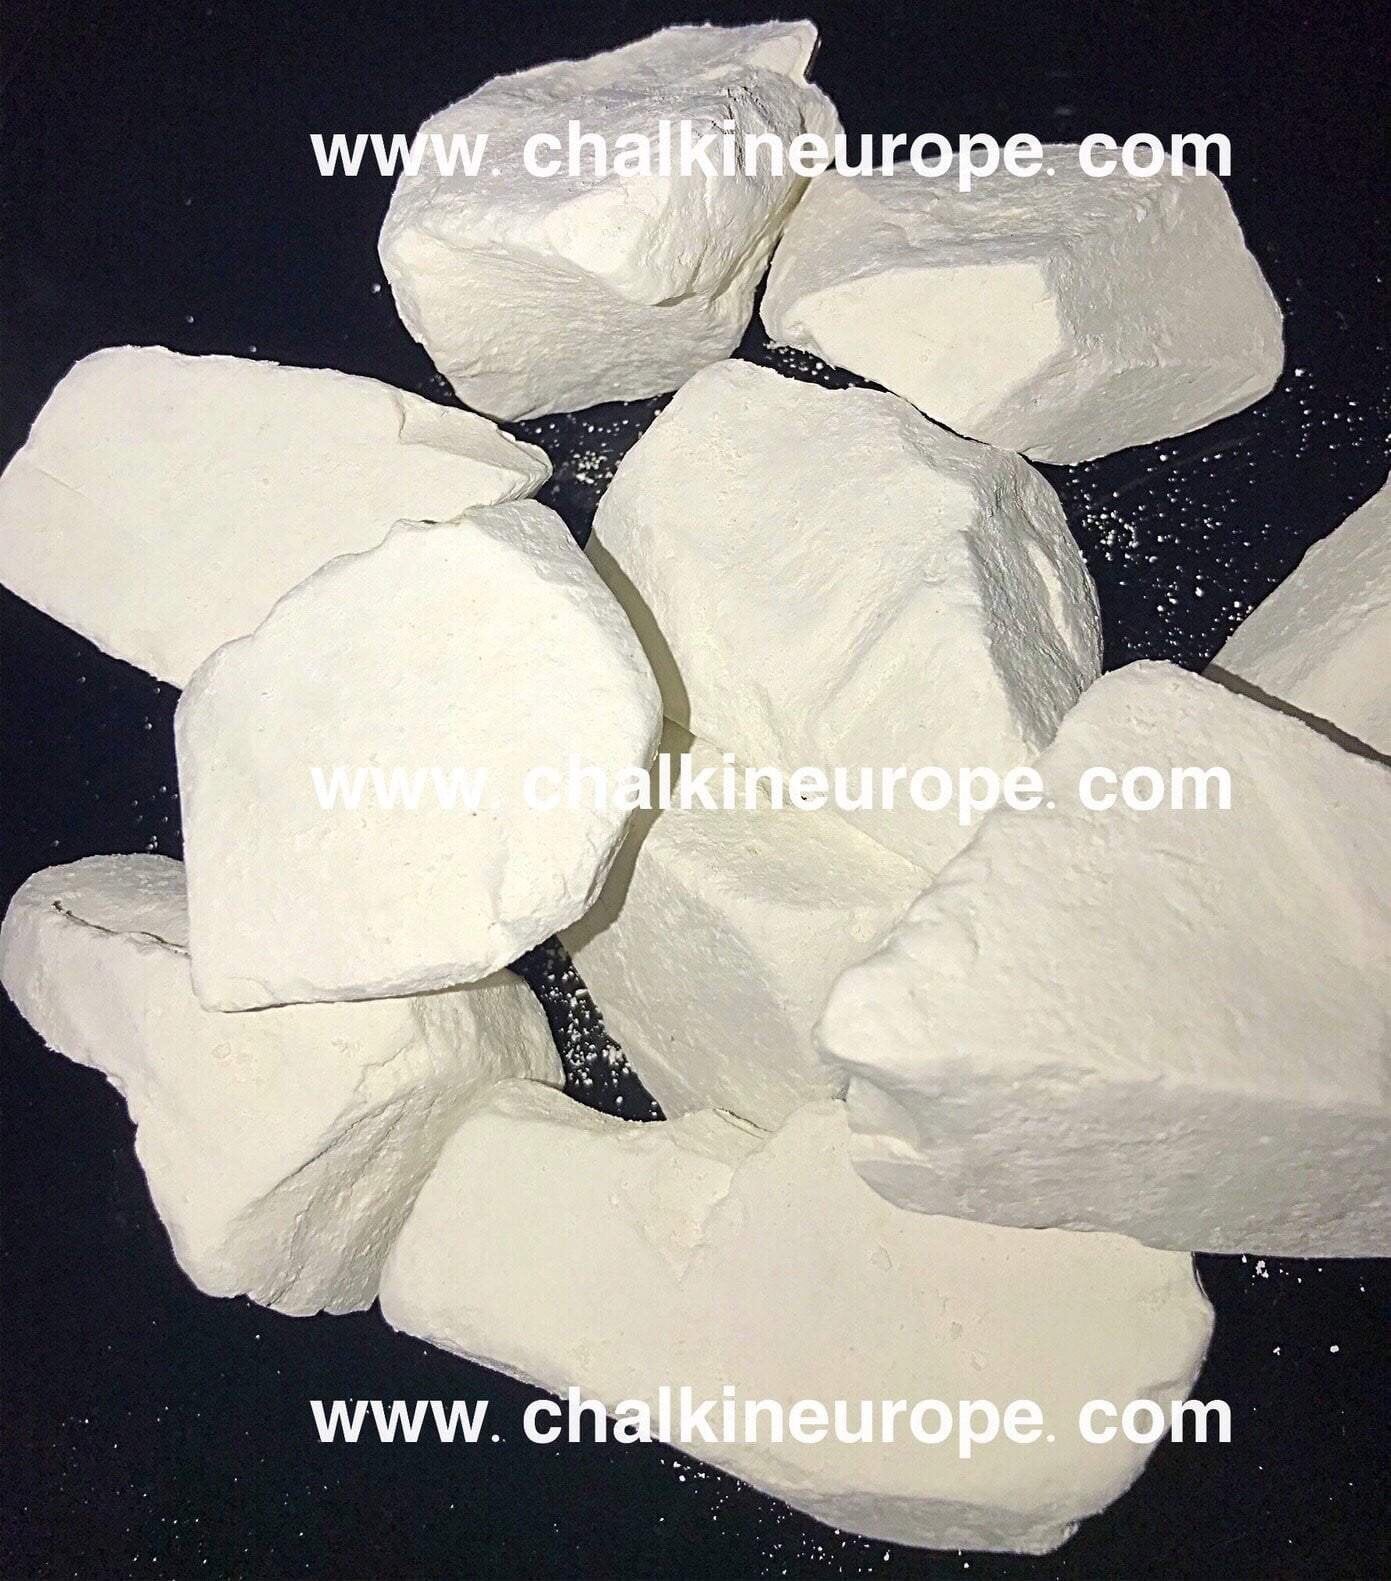 Edible chalk : RED edible Chalk chunks (lump) natural for eating (food)